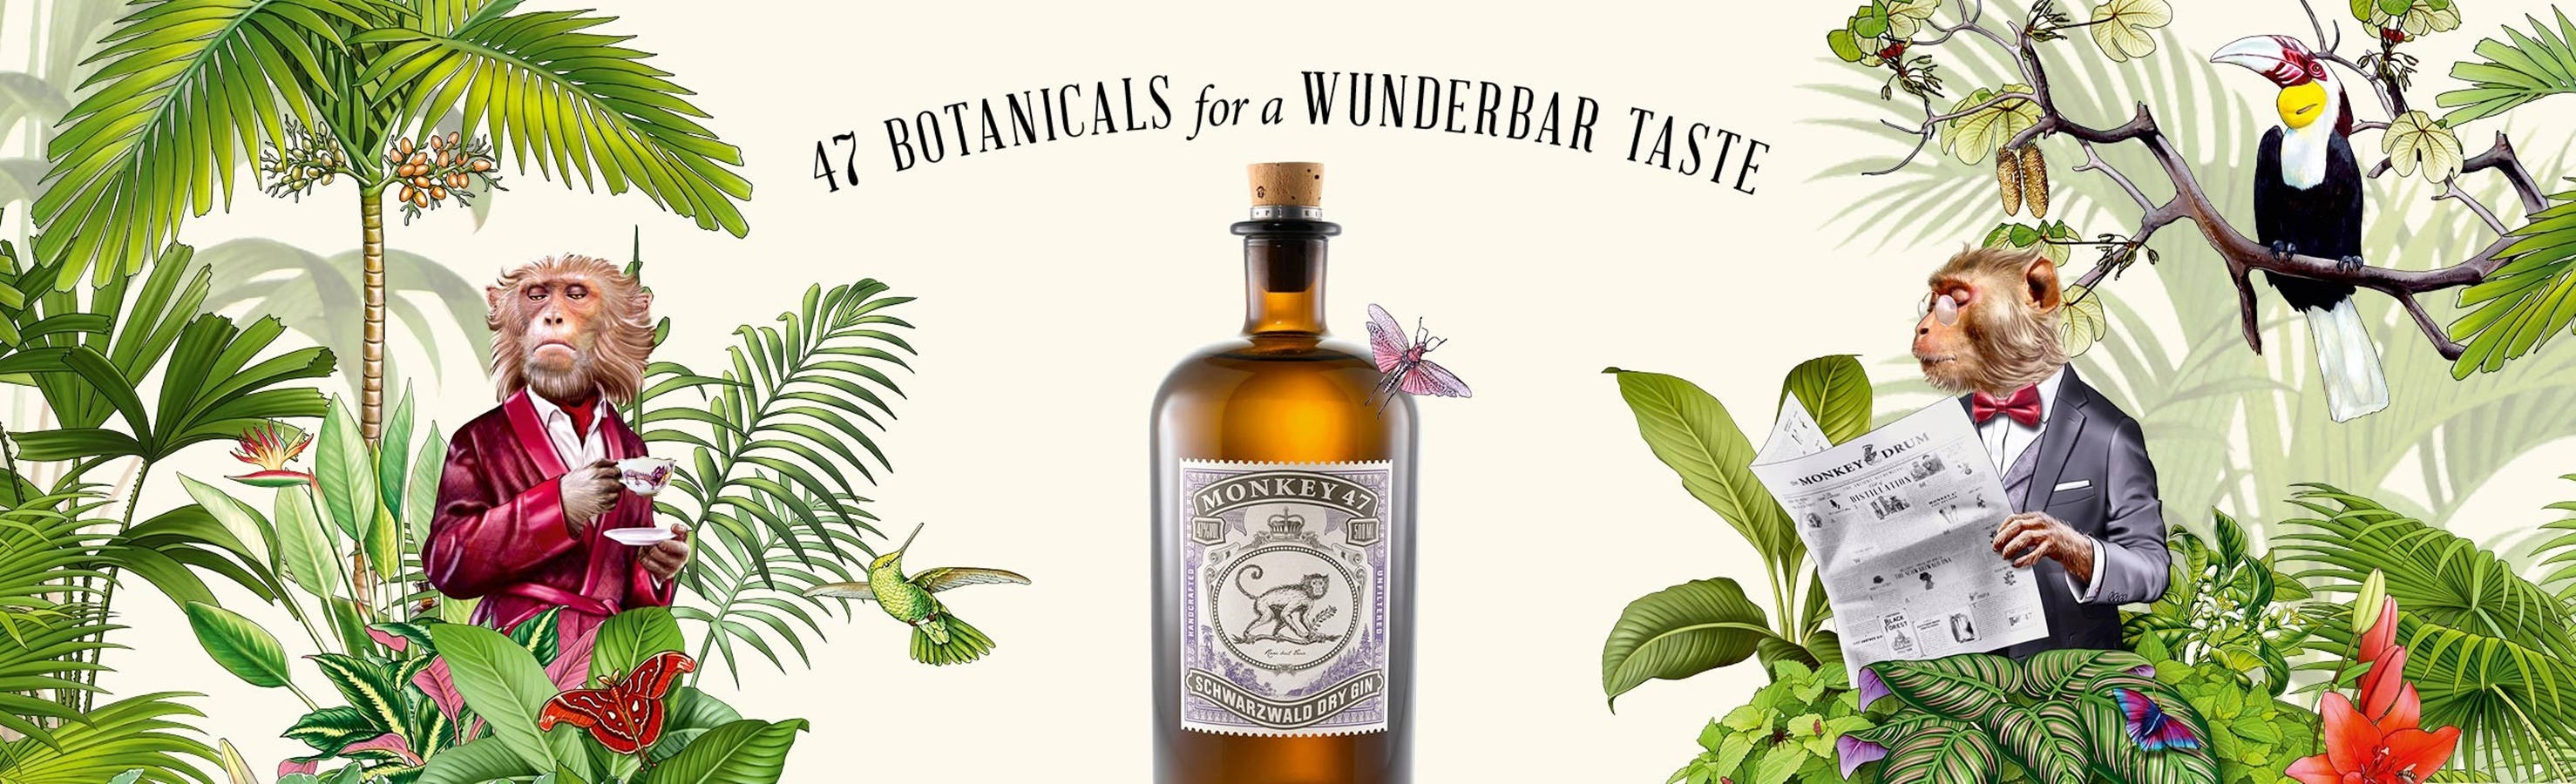 Botanical Ad Monkey 47 Gin Wallpaper